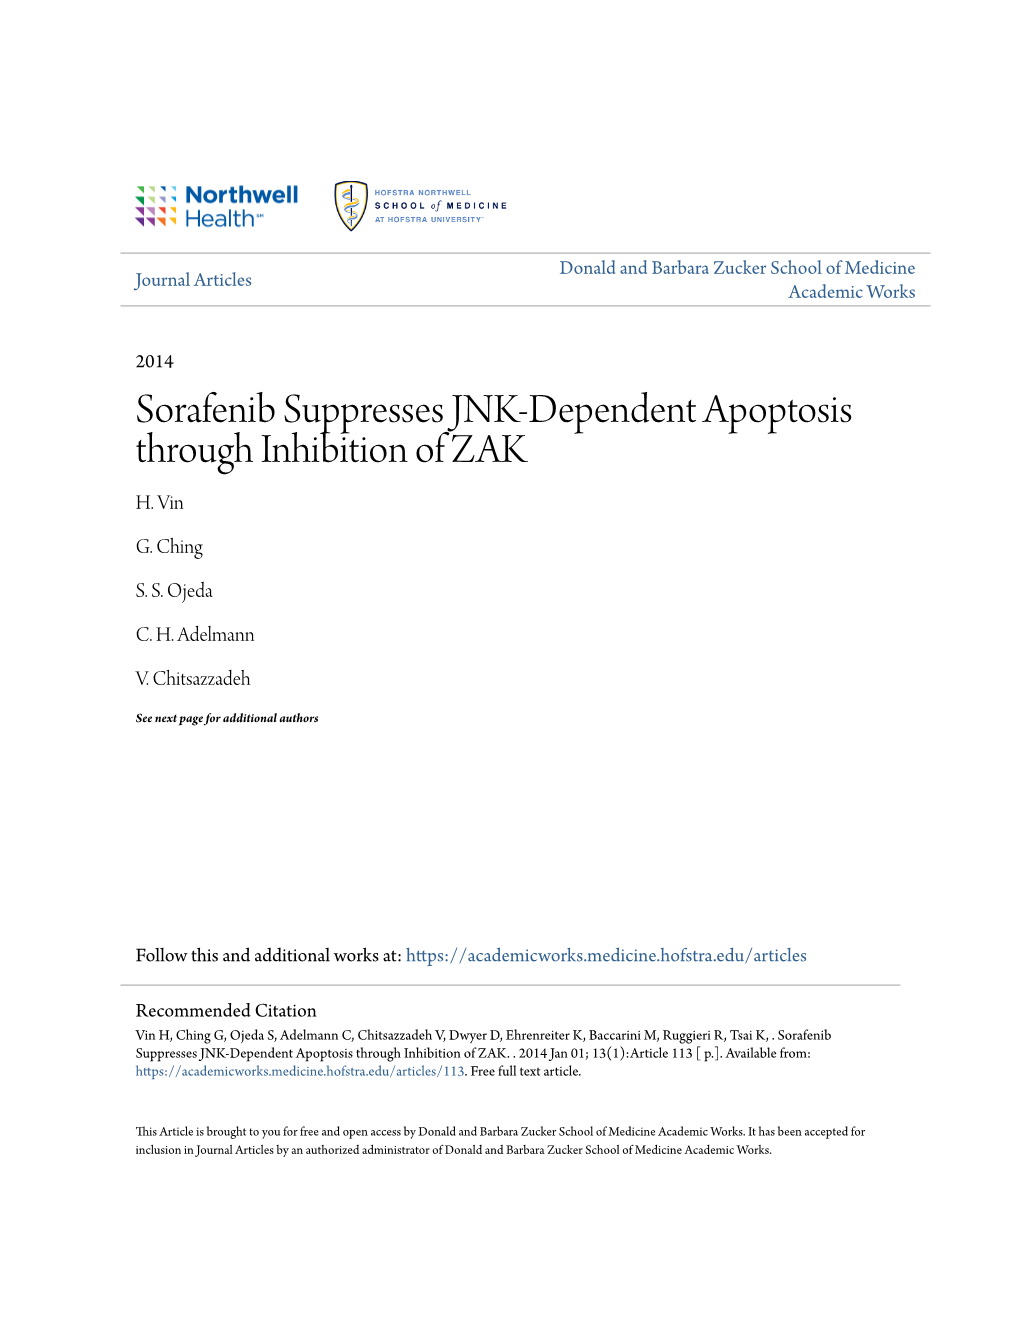 Sorafenib Suppresses JNK-Dependent Apoptosis Through Inhibition of ZAK H